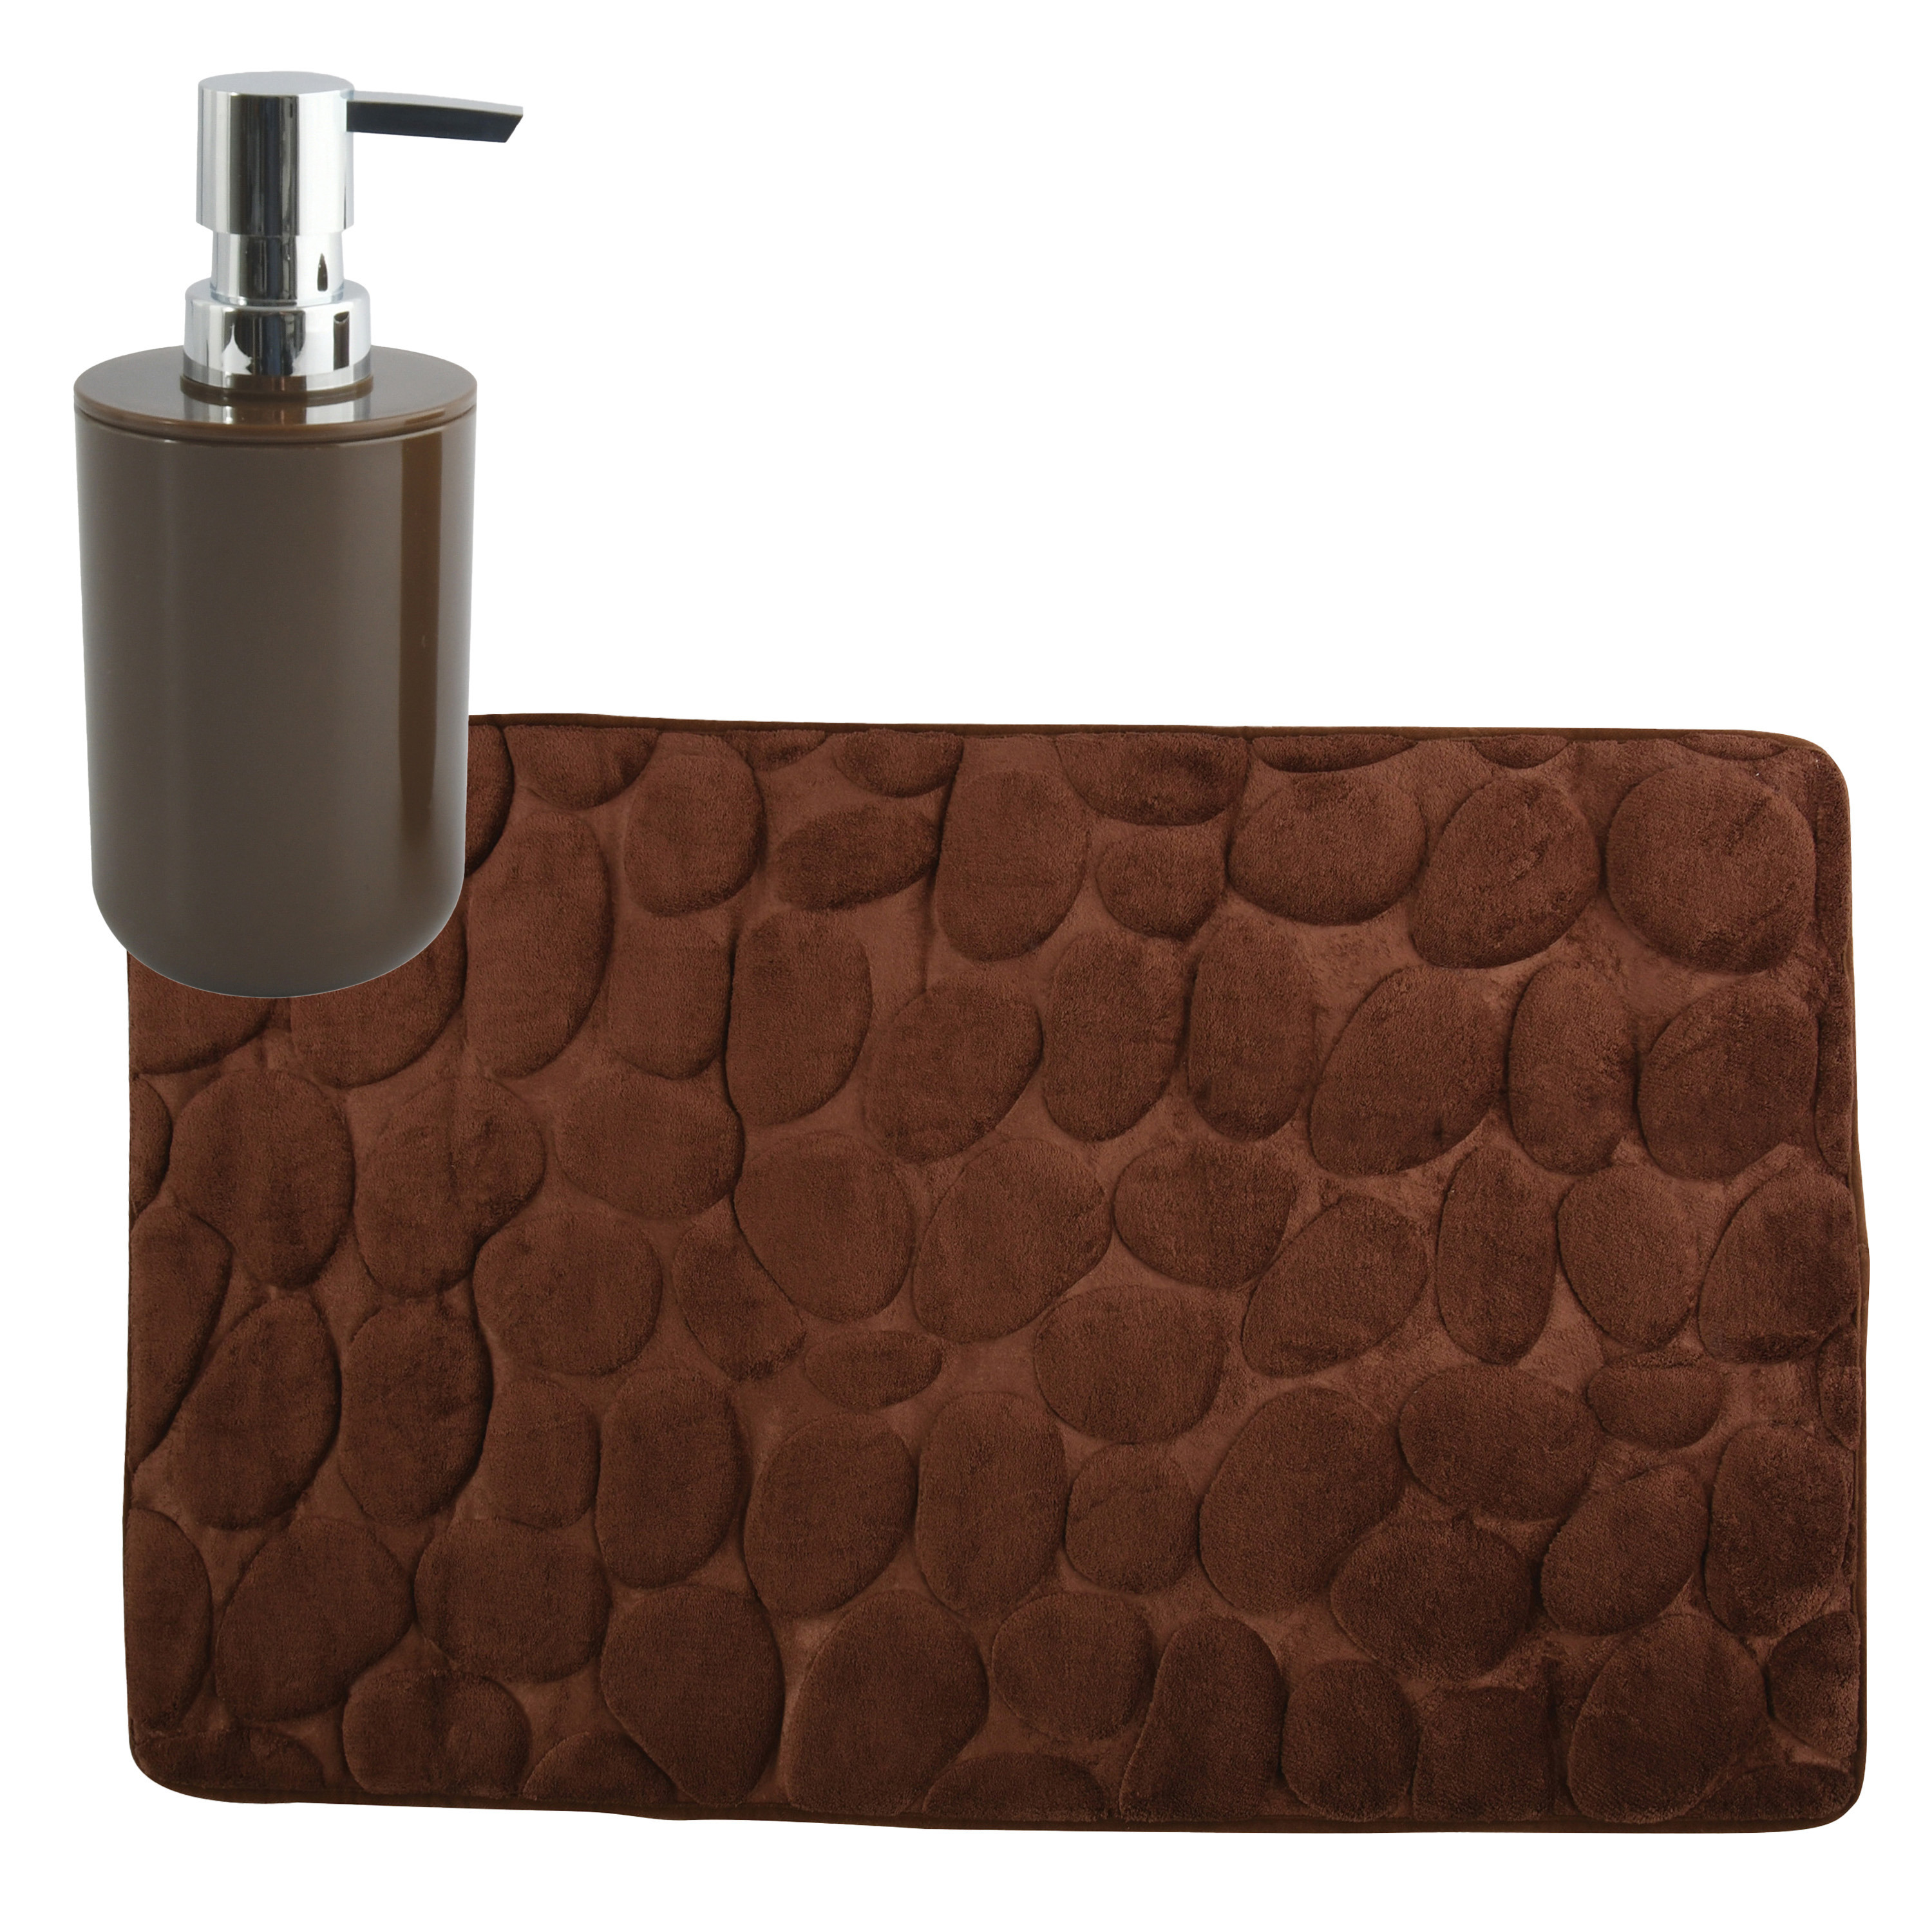 MSV badkamer droogloop mat-tapijt Kiezel 50 x 80 cm zelfde kleur zeeppompje bruin